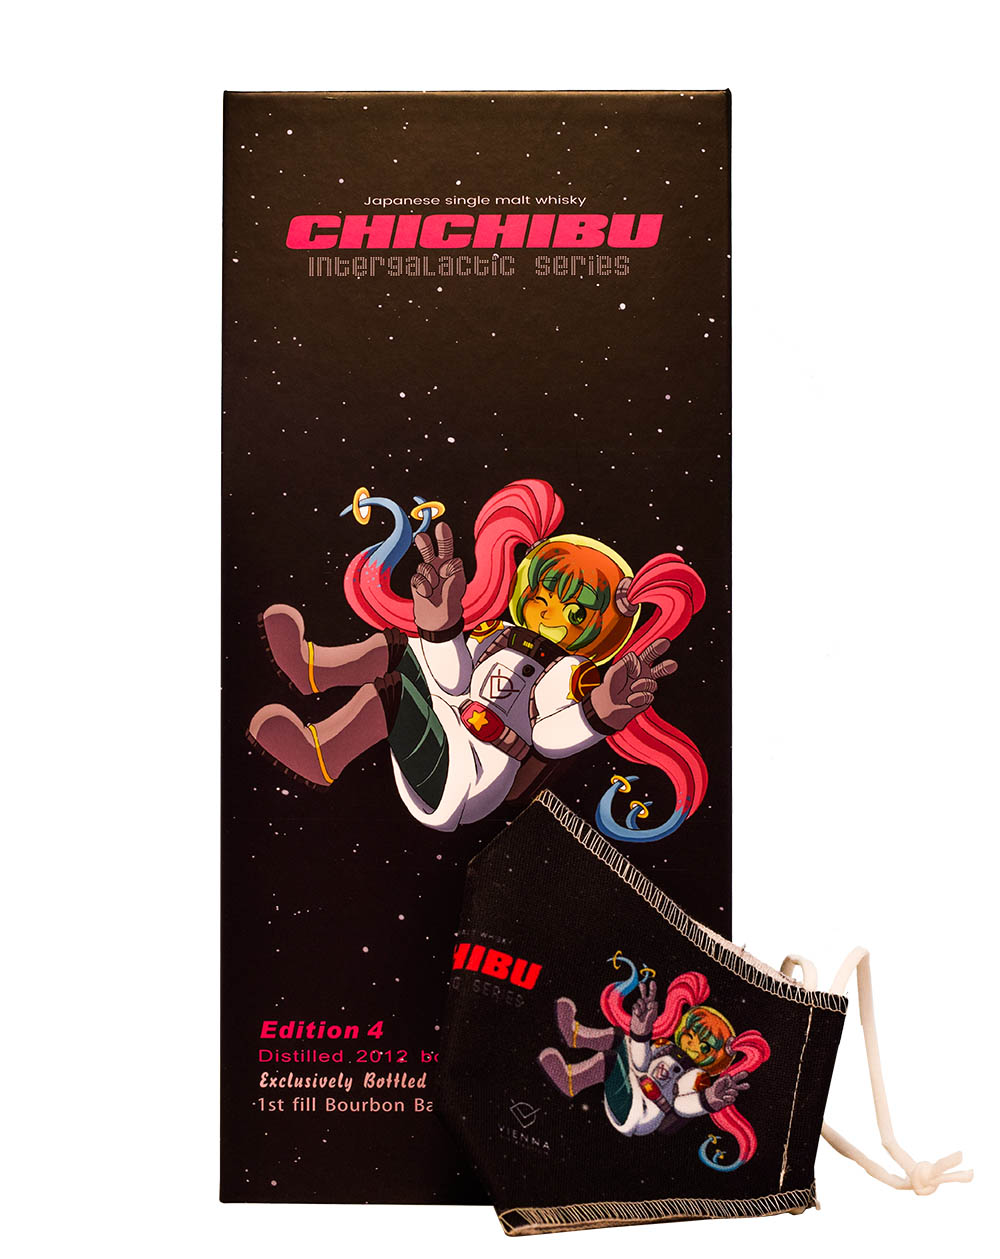 Chichibu 2012 - Intergalactic Series Edition 4 Box Musthave Malts MHM